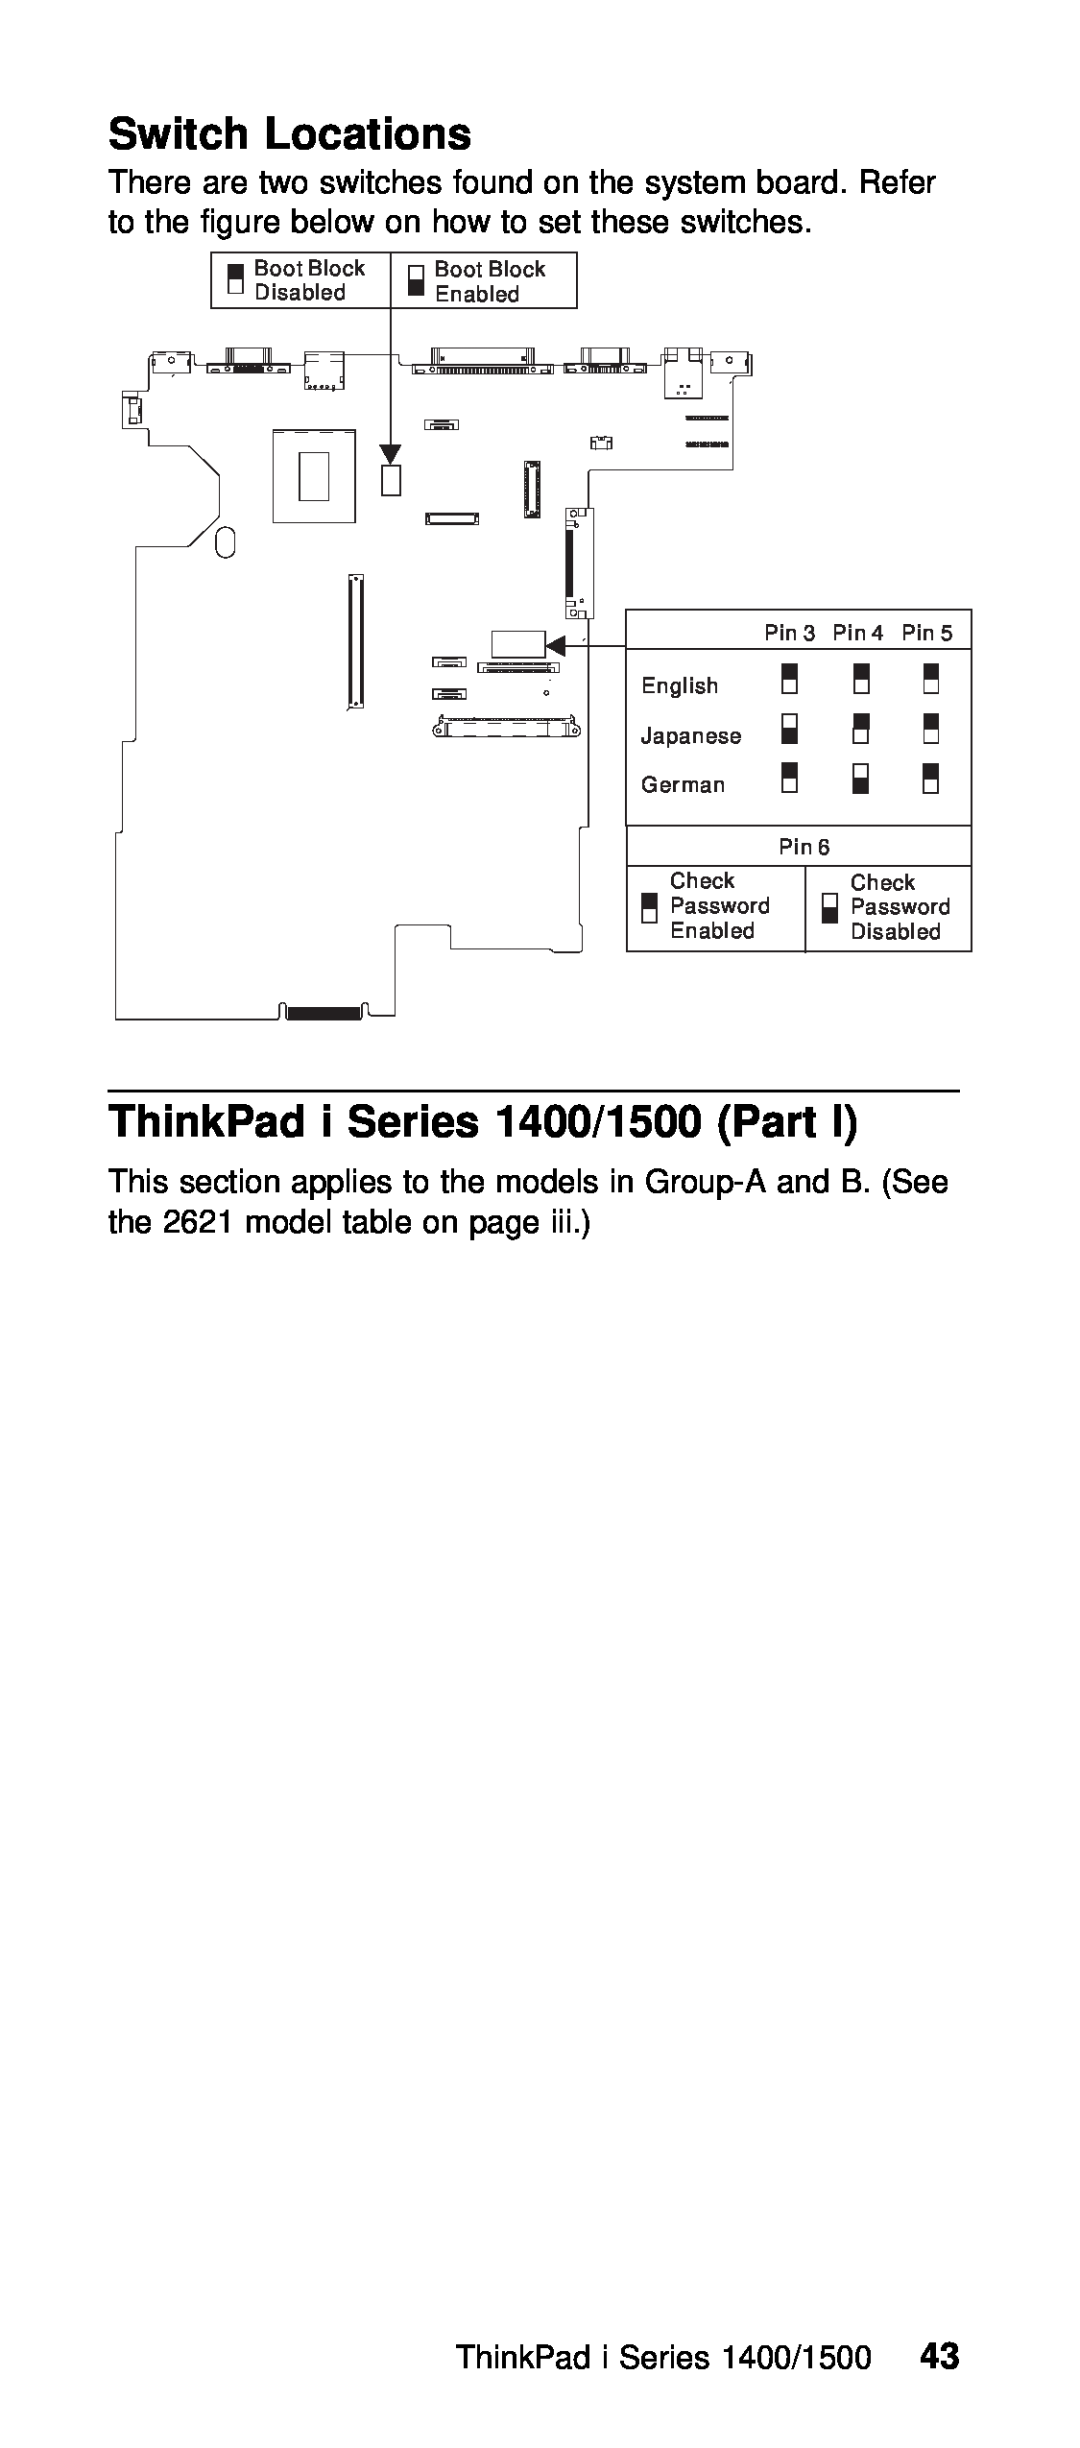 IBM Series 1400, Series 1500 manual Switch Locations, Part, ThinkPad, 1400/1500 